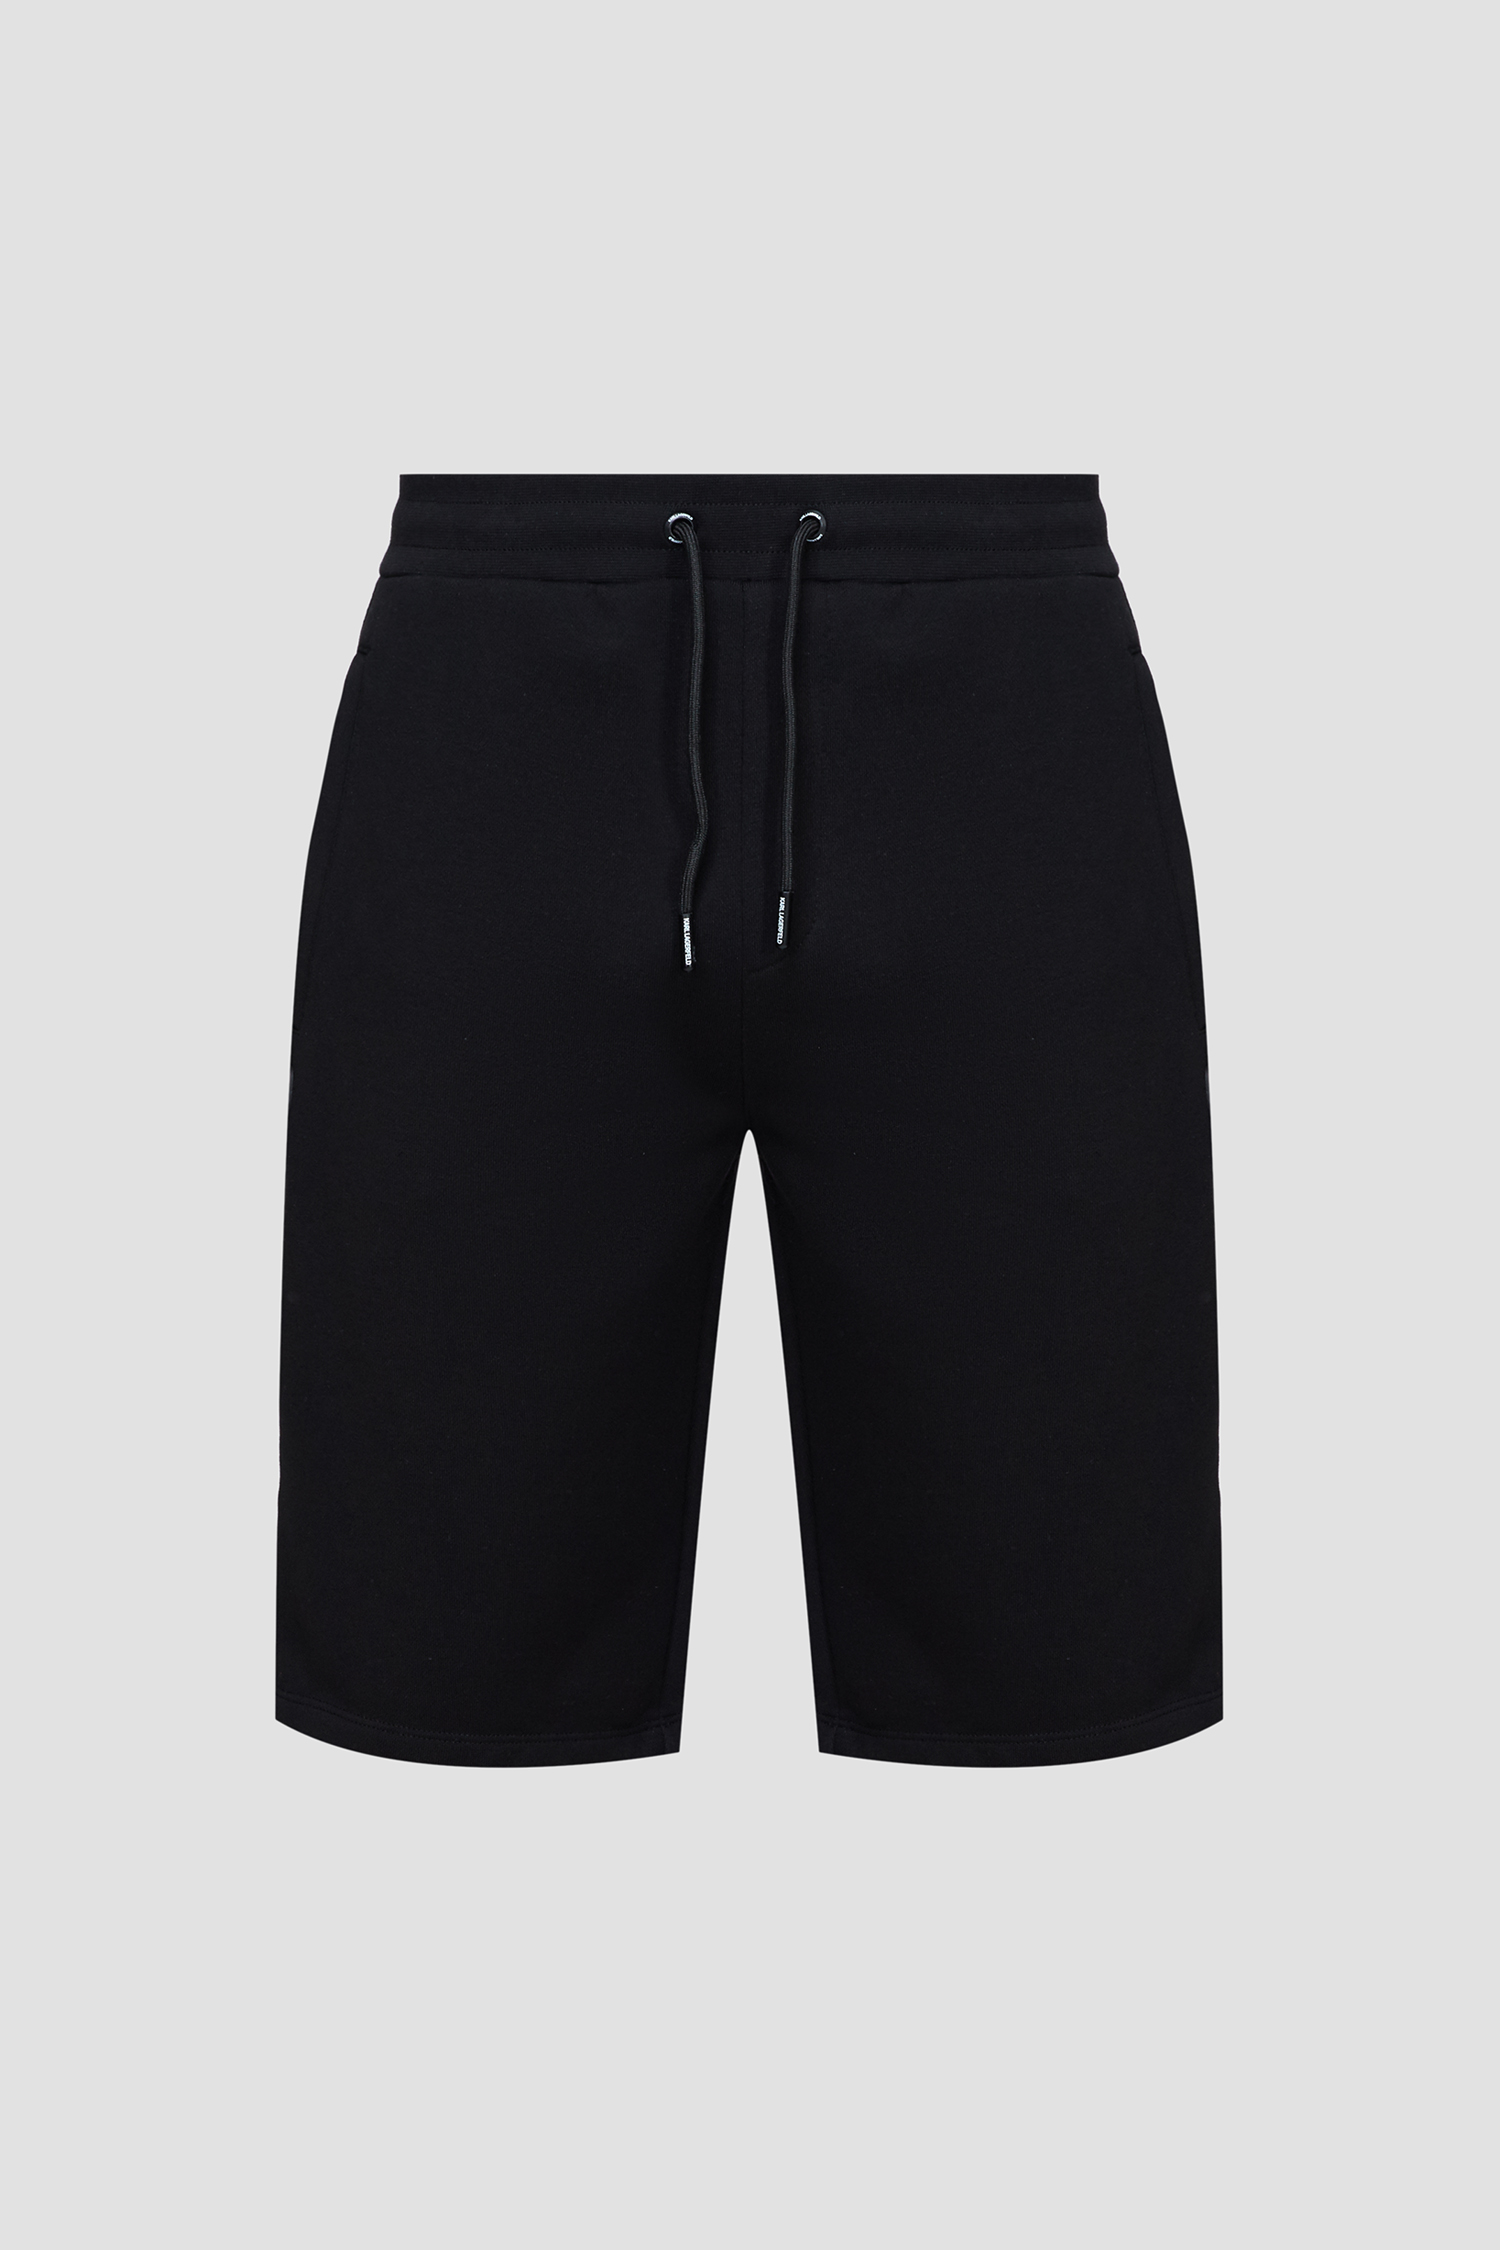 Мужские черные шорты Karl Lagerfeld 532900.705046;990